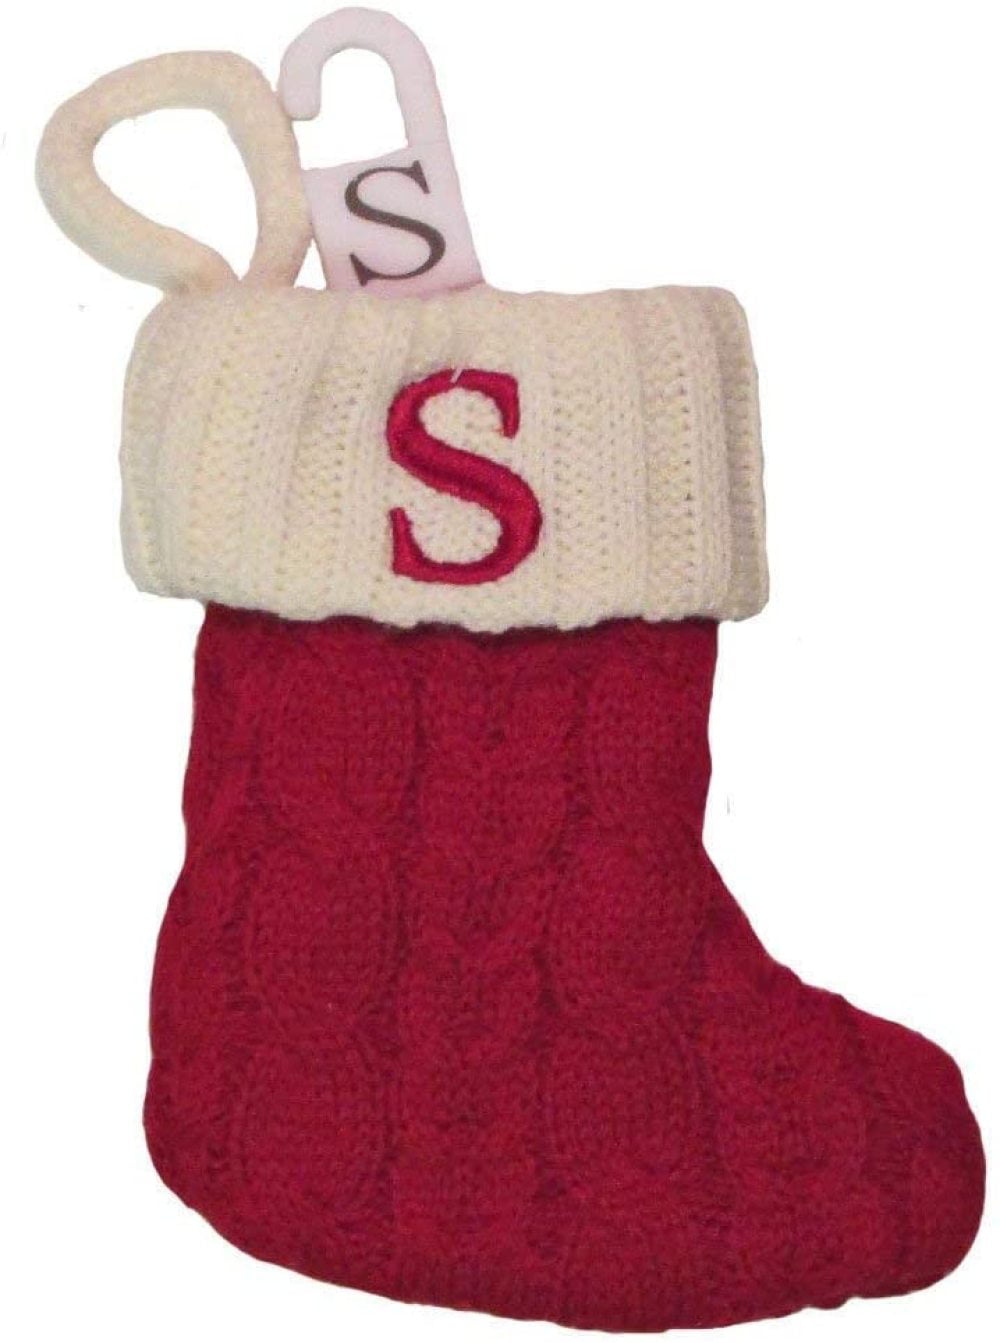 New Christmas Mini Knit Stockings Holiday Decorations Letter B D E H P N K C 